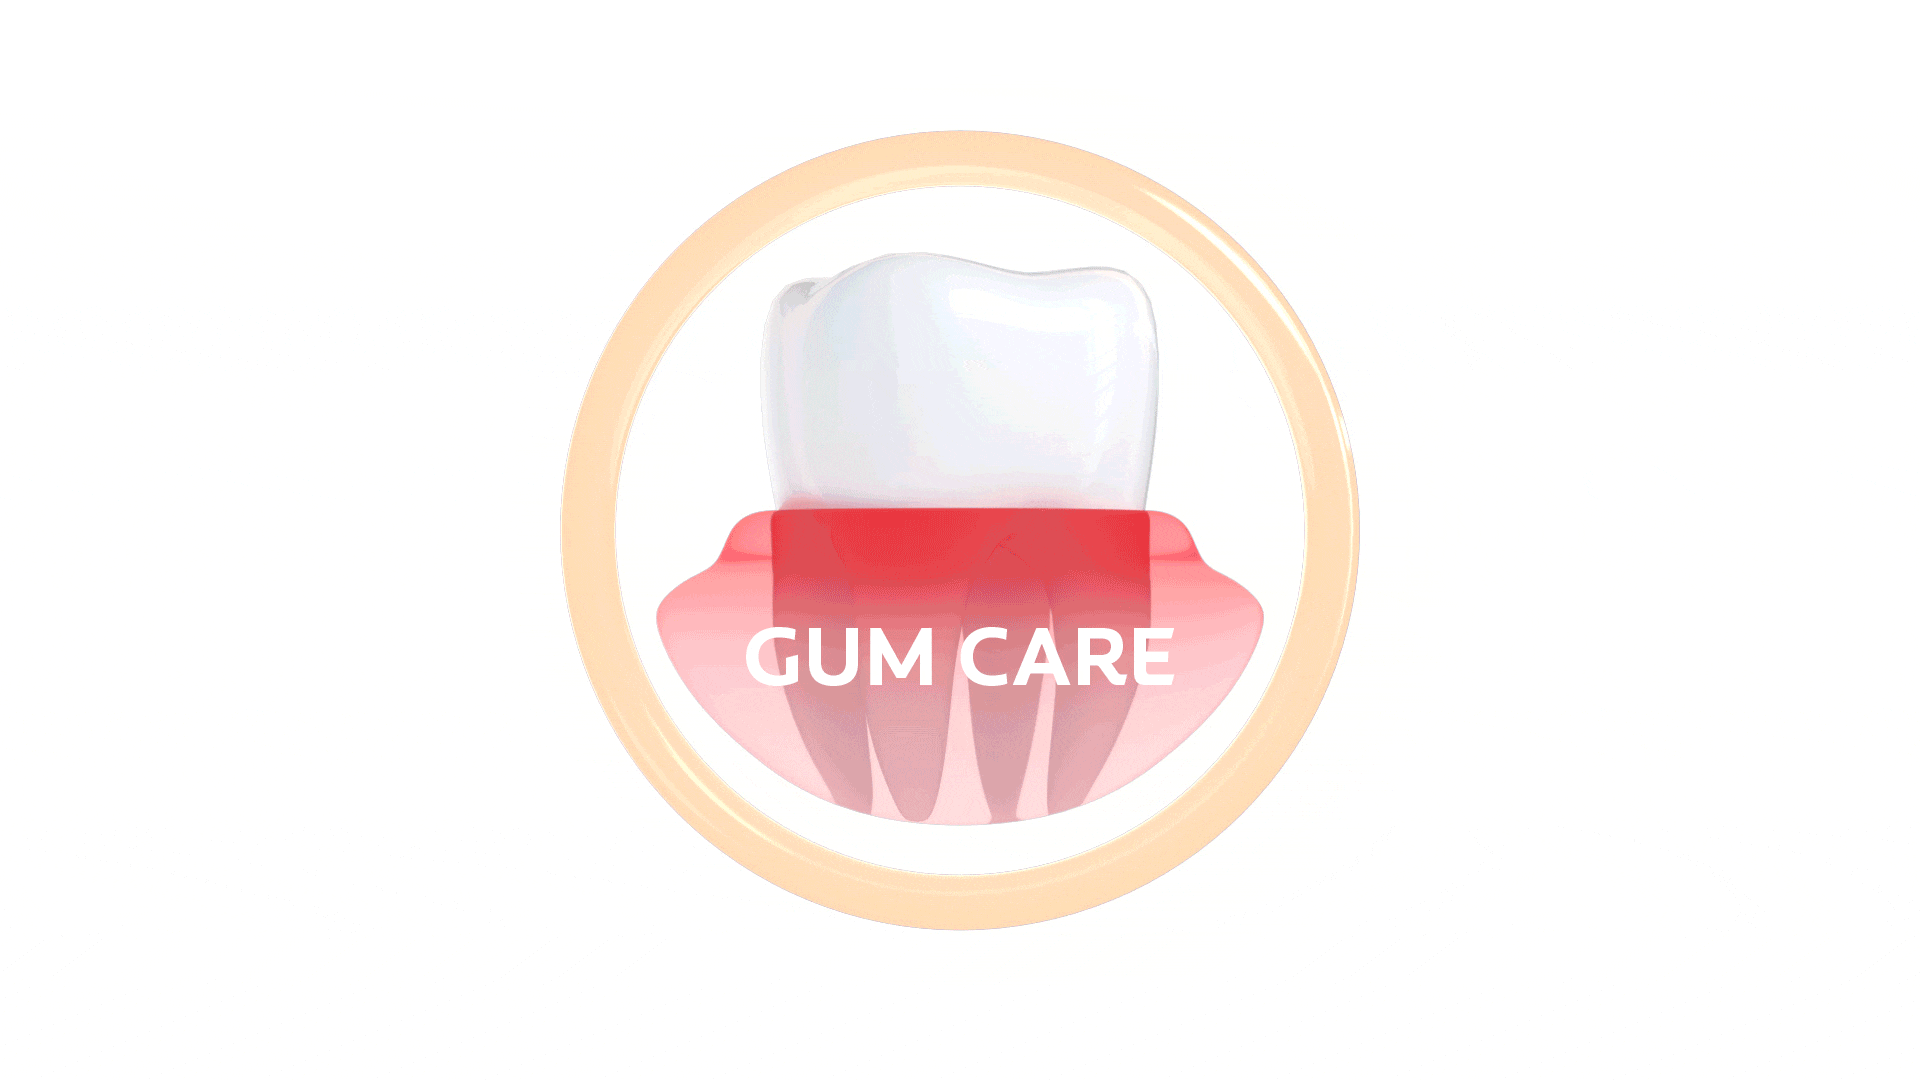 Gum Health